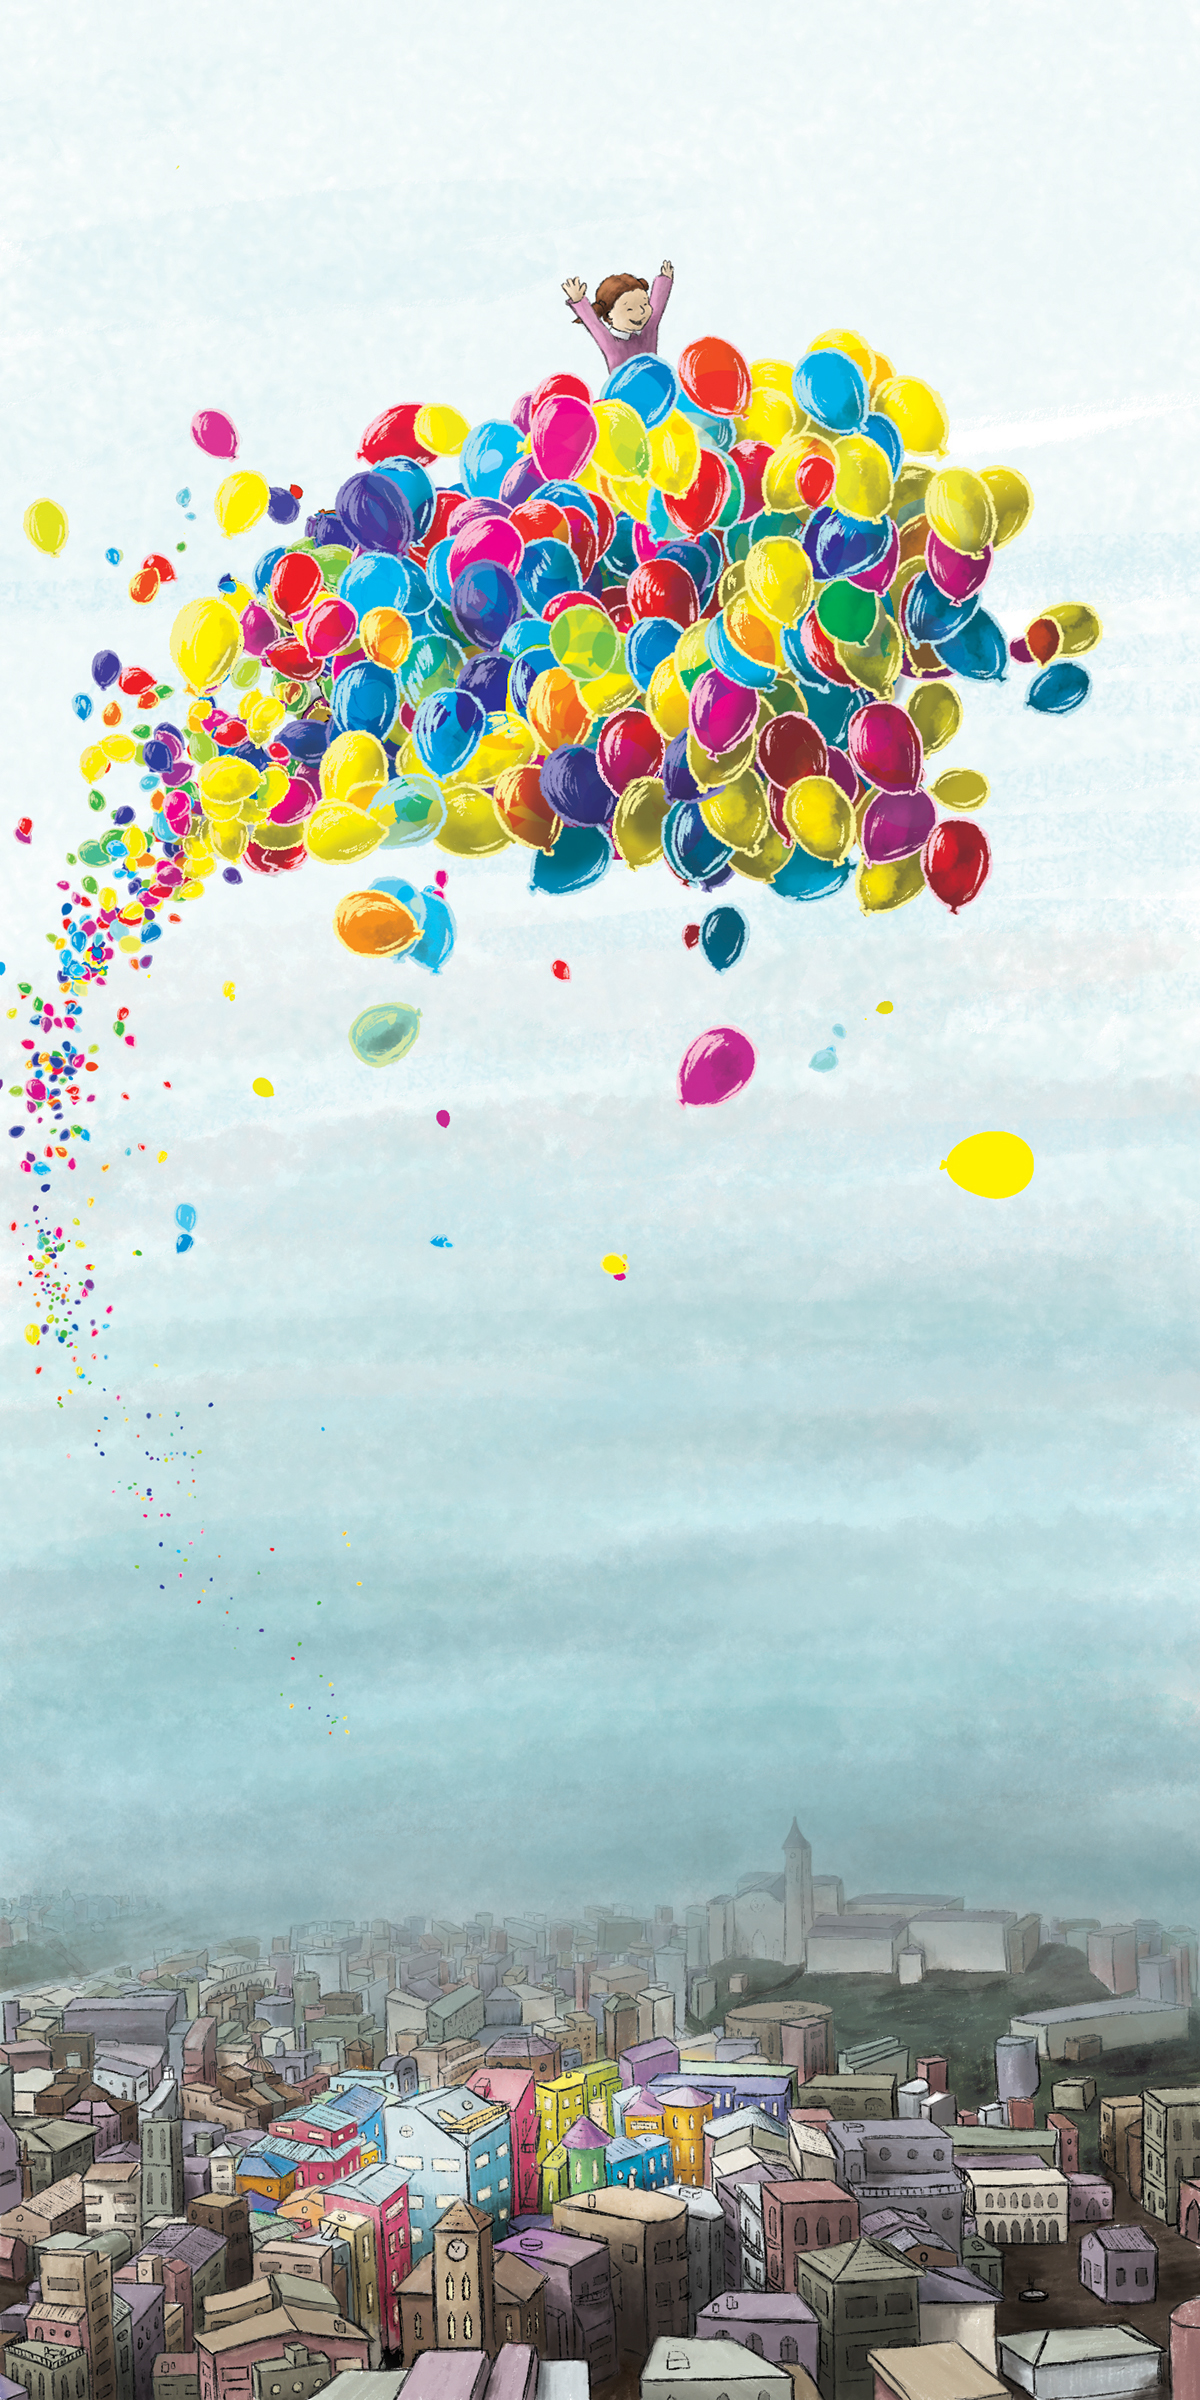 children's book balloons imagination